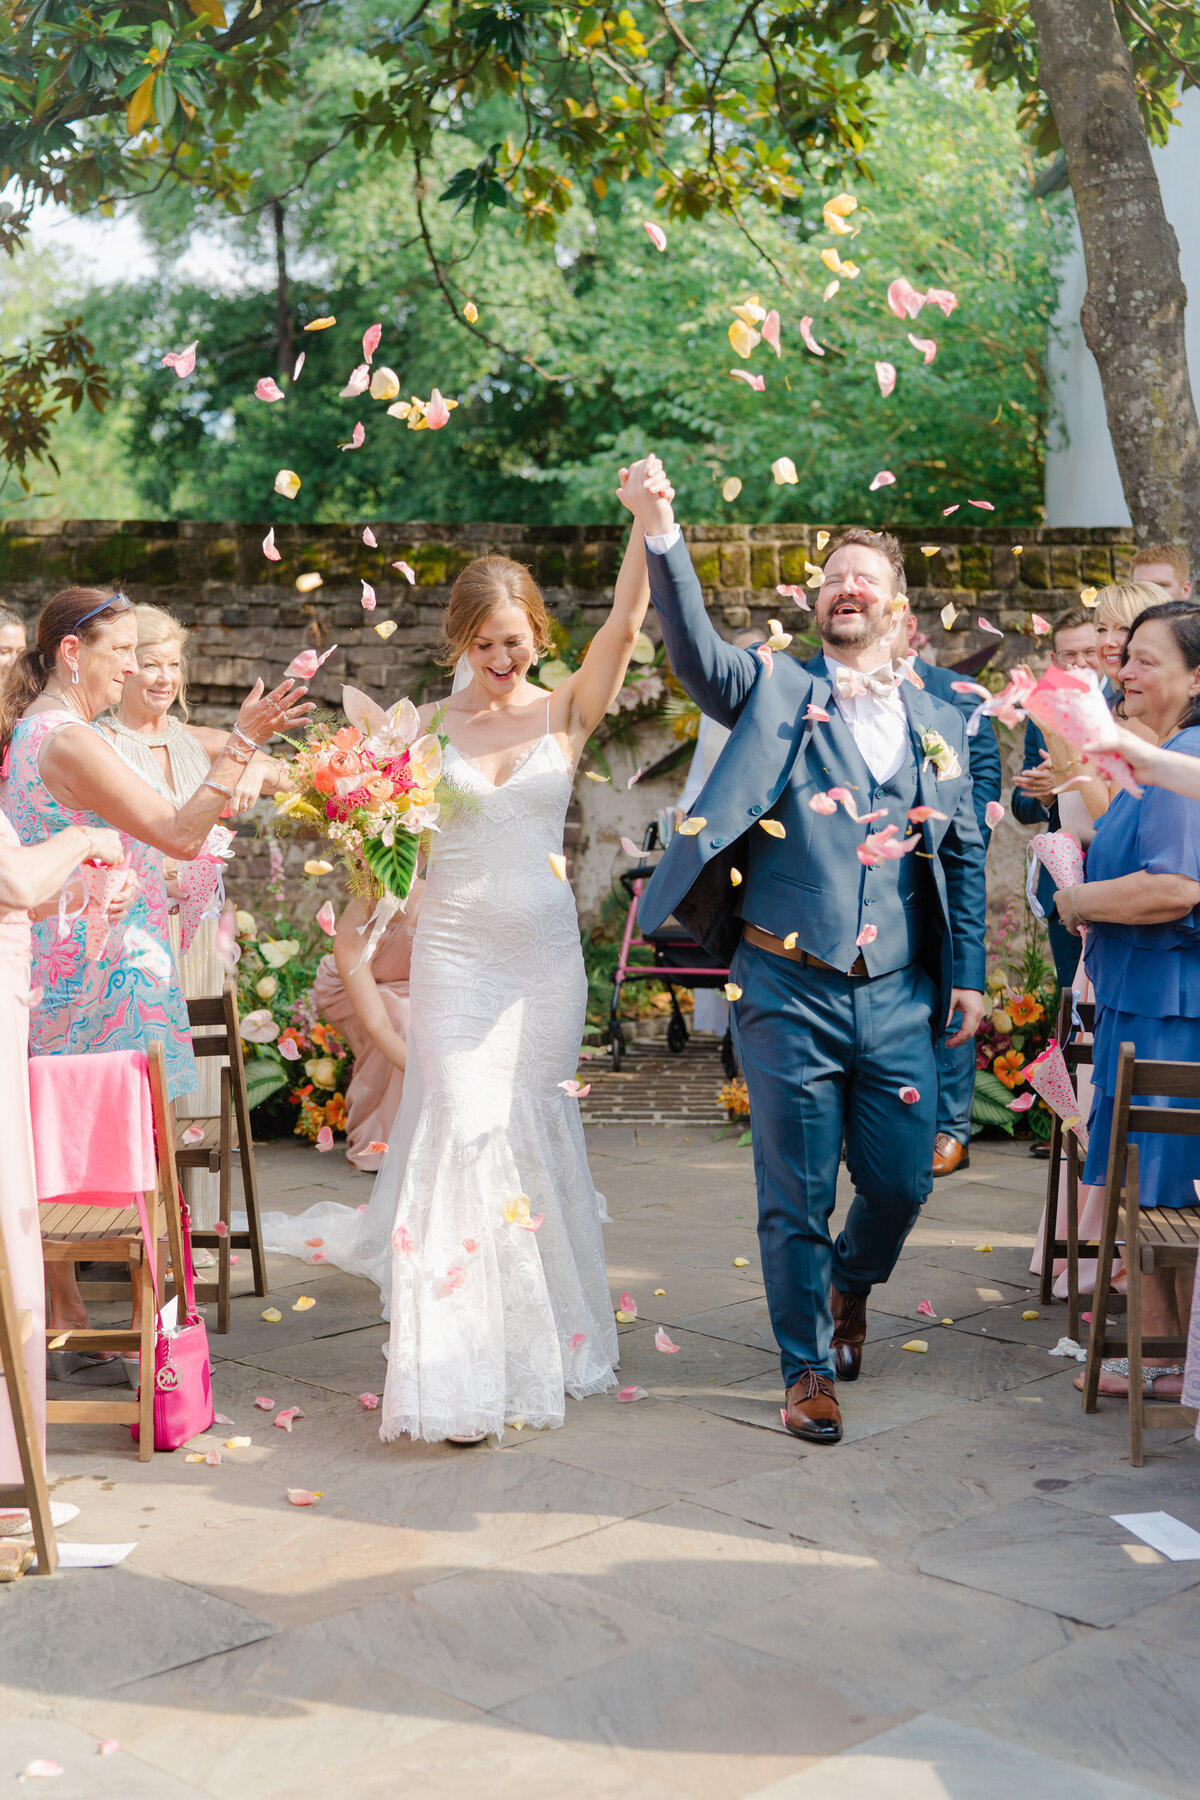 Spring Gadsden House wedding ceremony exit petal toss. Colorful flower petals.